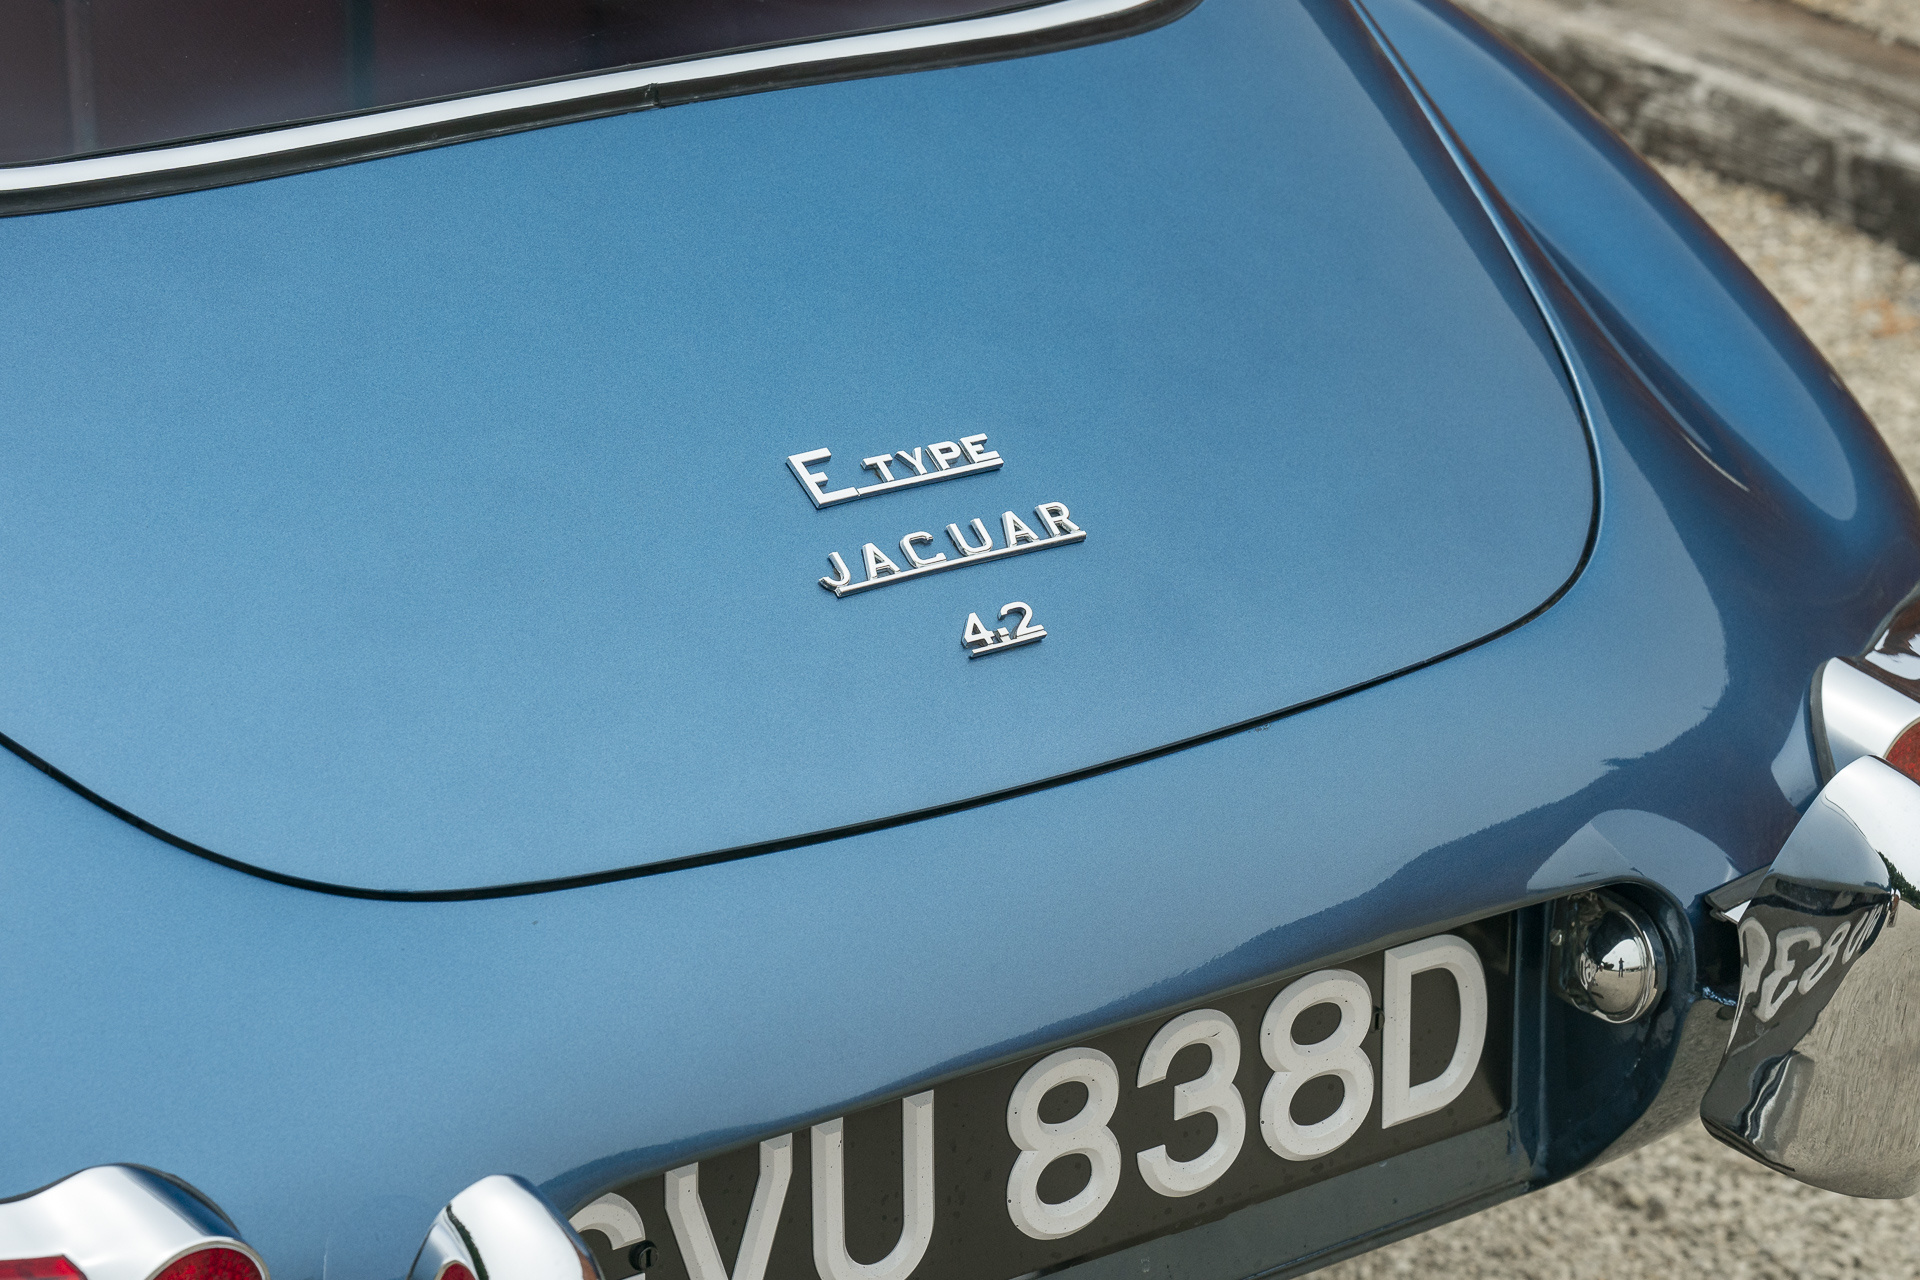 1966 Jaguar E-type 4.2 FHC for sale at The Classic Motor Hub